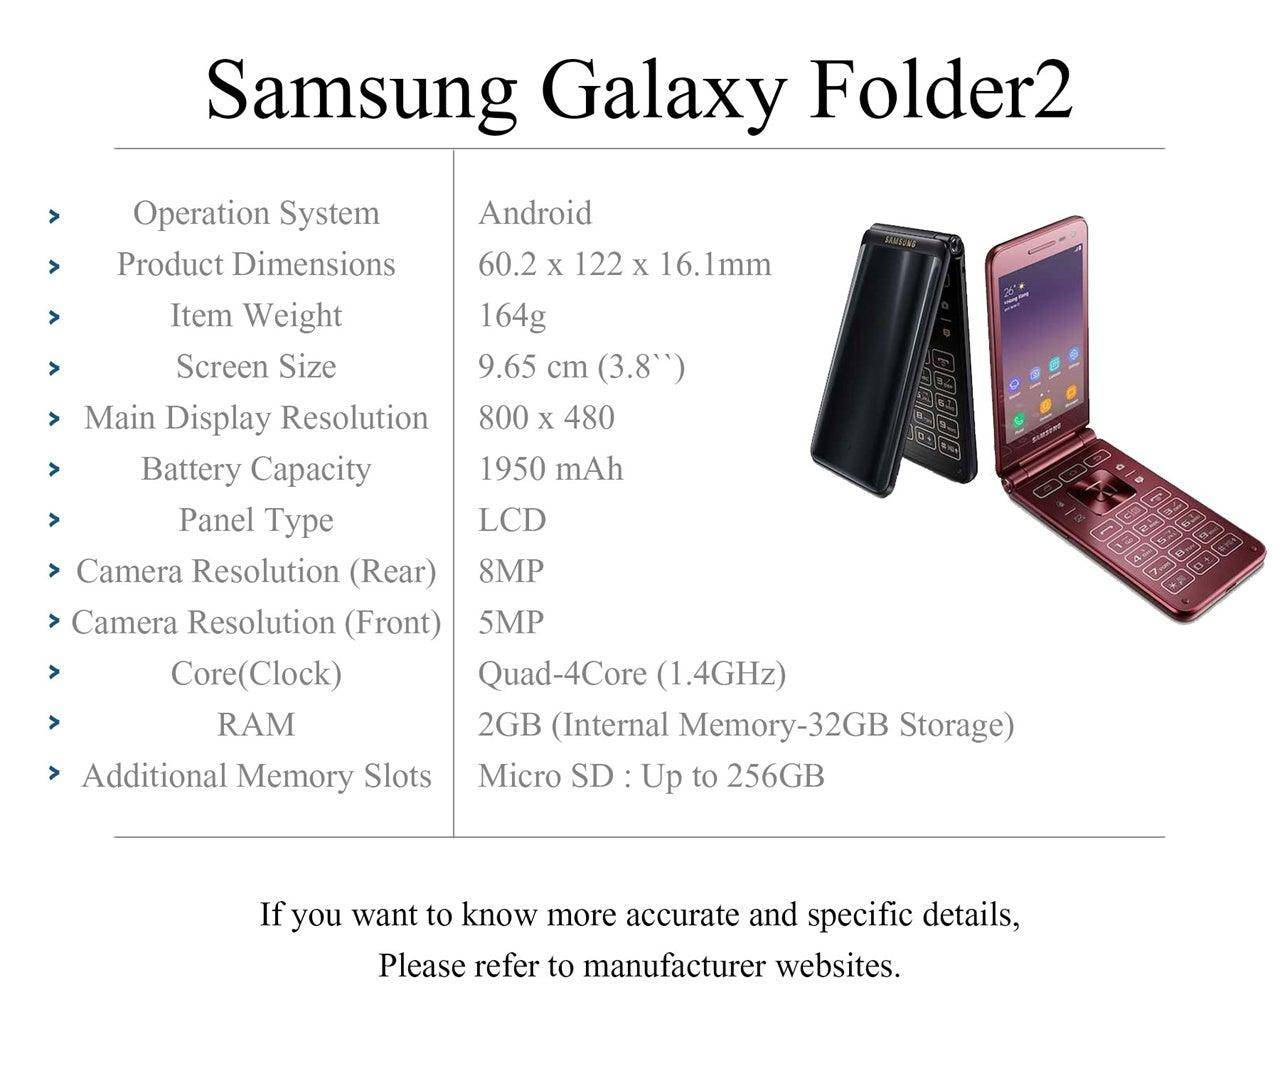 Samsung Galaxy Folder 2 4G LTE (Android Touch Screen Flip Phone) *REFURBISHED* - Mainz Empire Pte Ltd